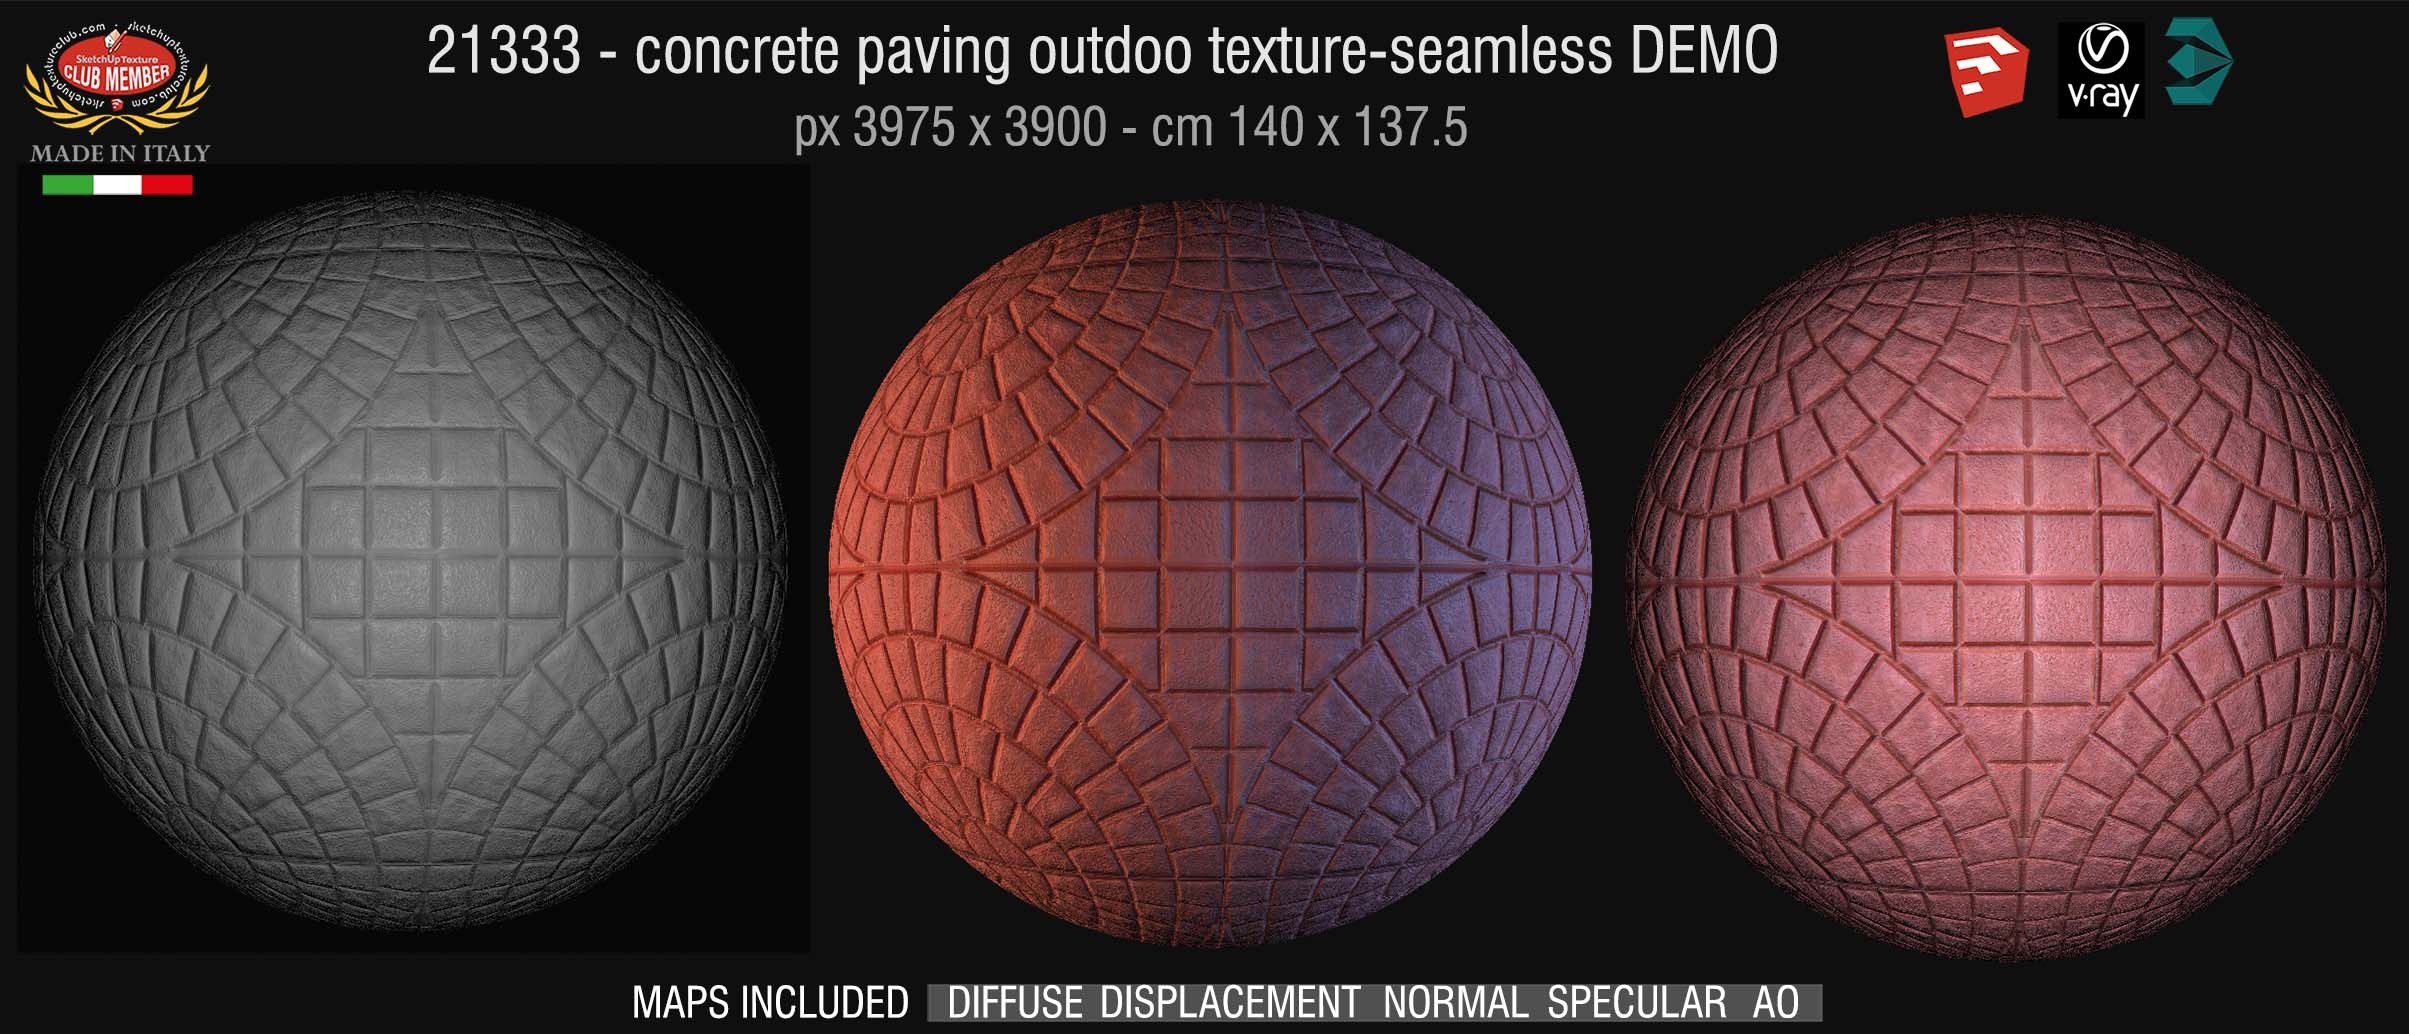 21333 HR concrete paving outdoor texture seamless + maps DEMO